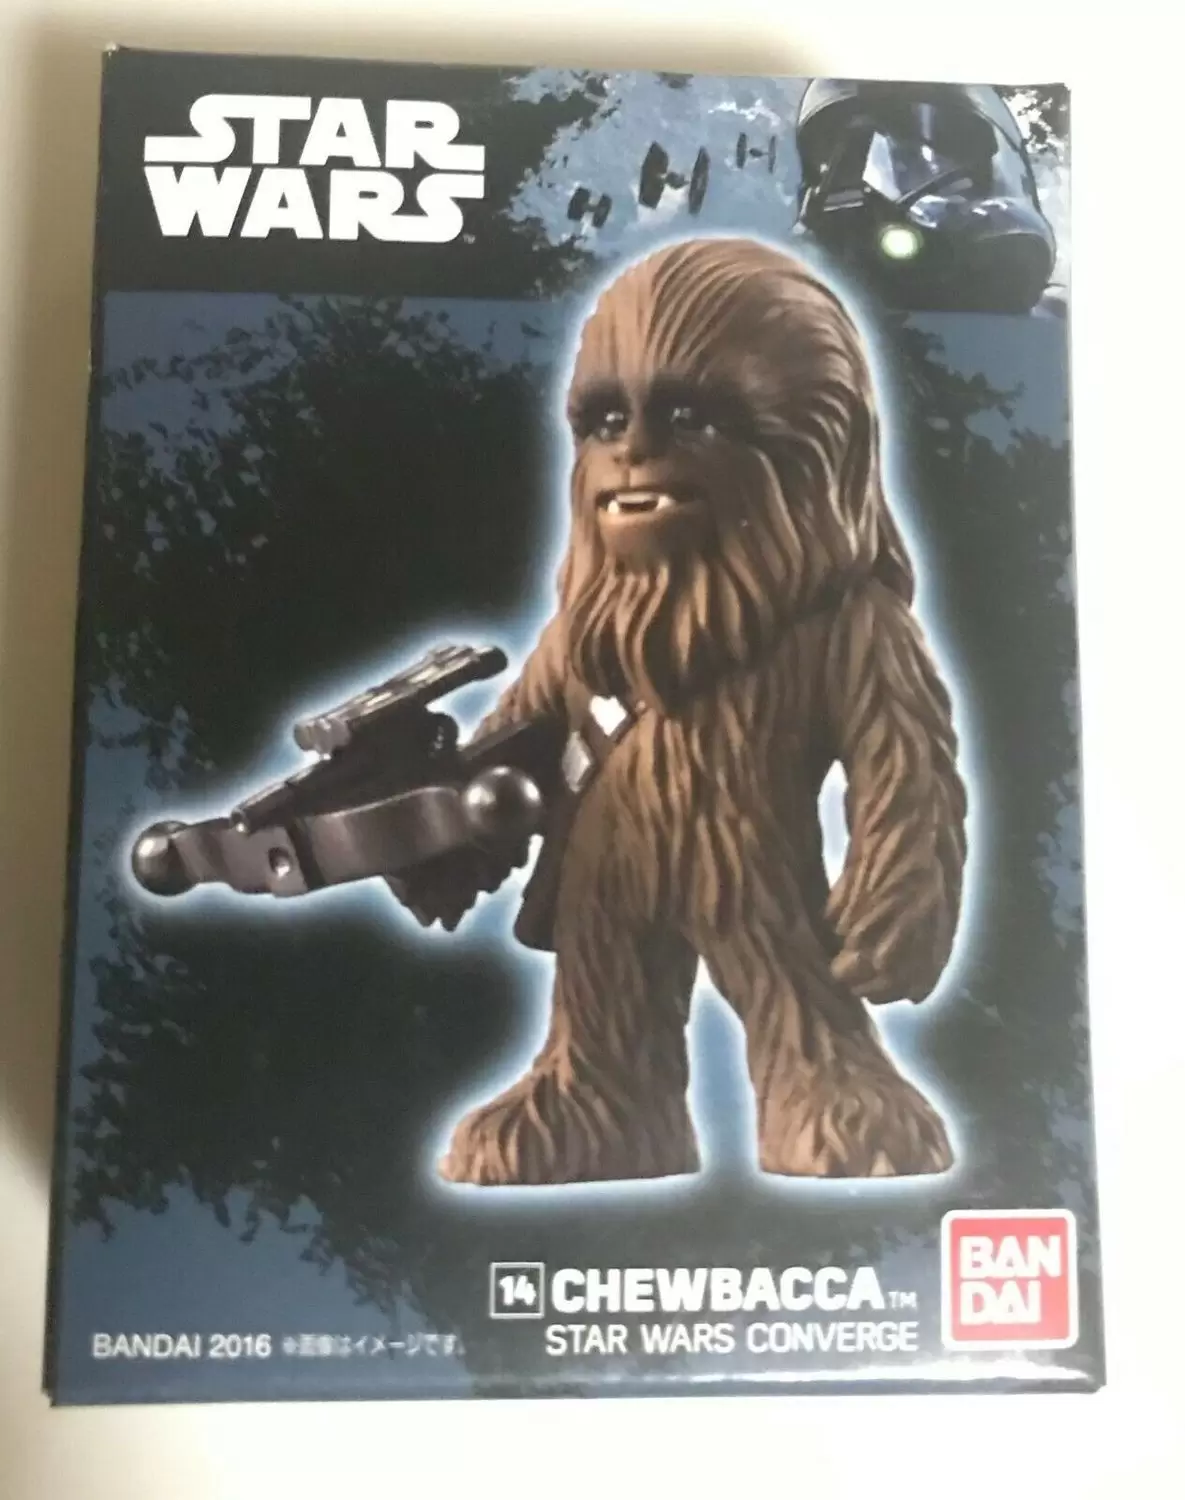 Star Wars Converge - Chewbacca